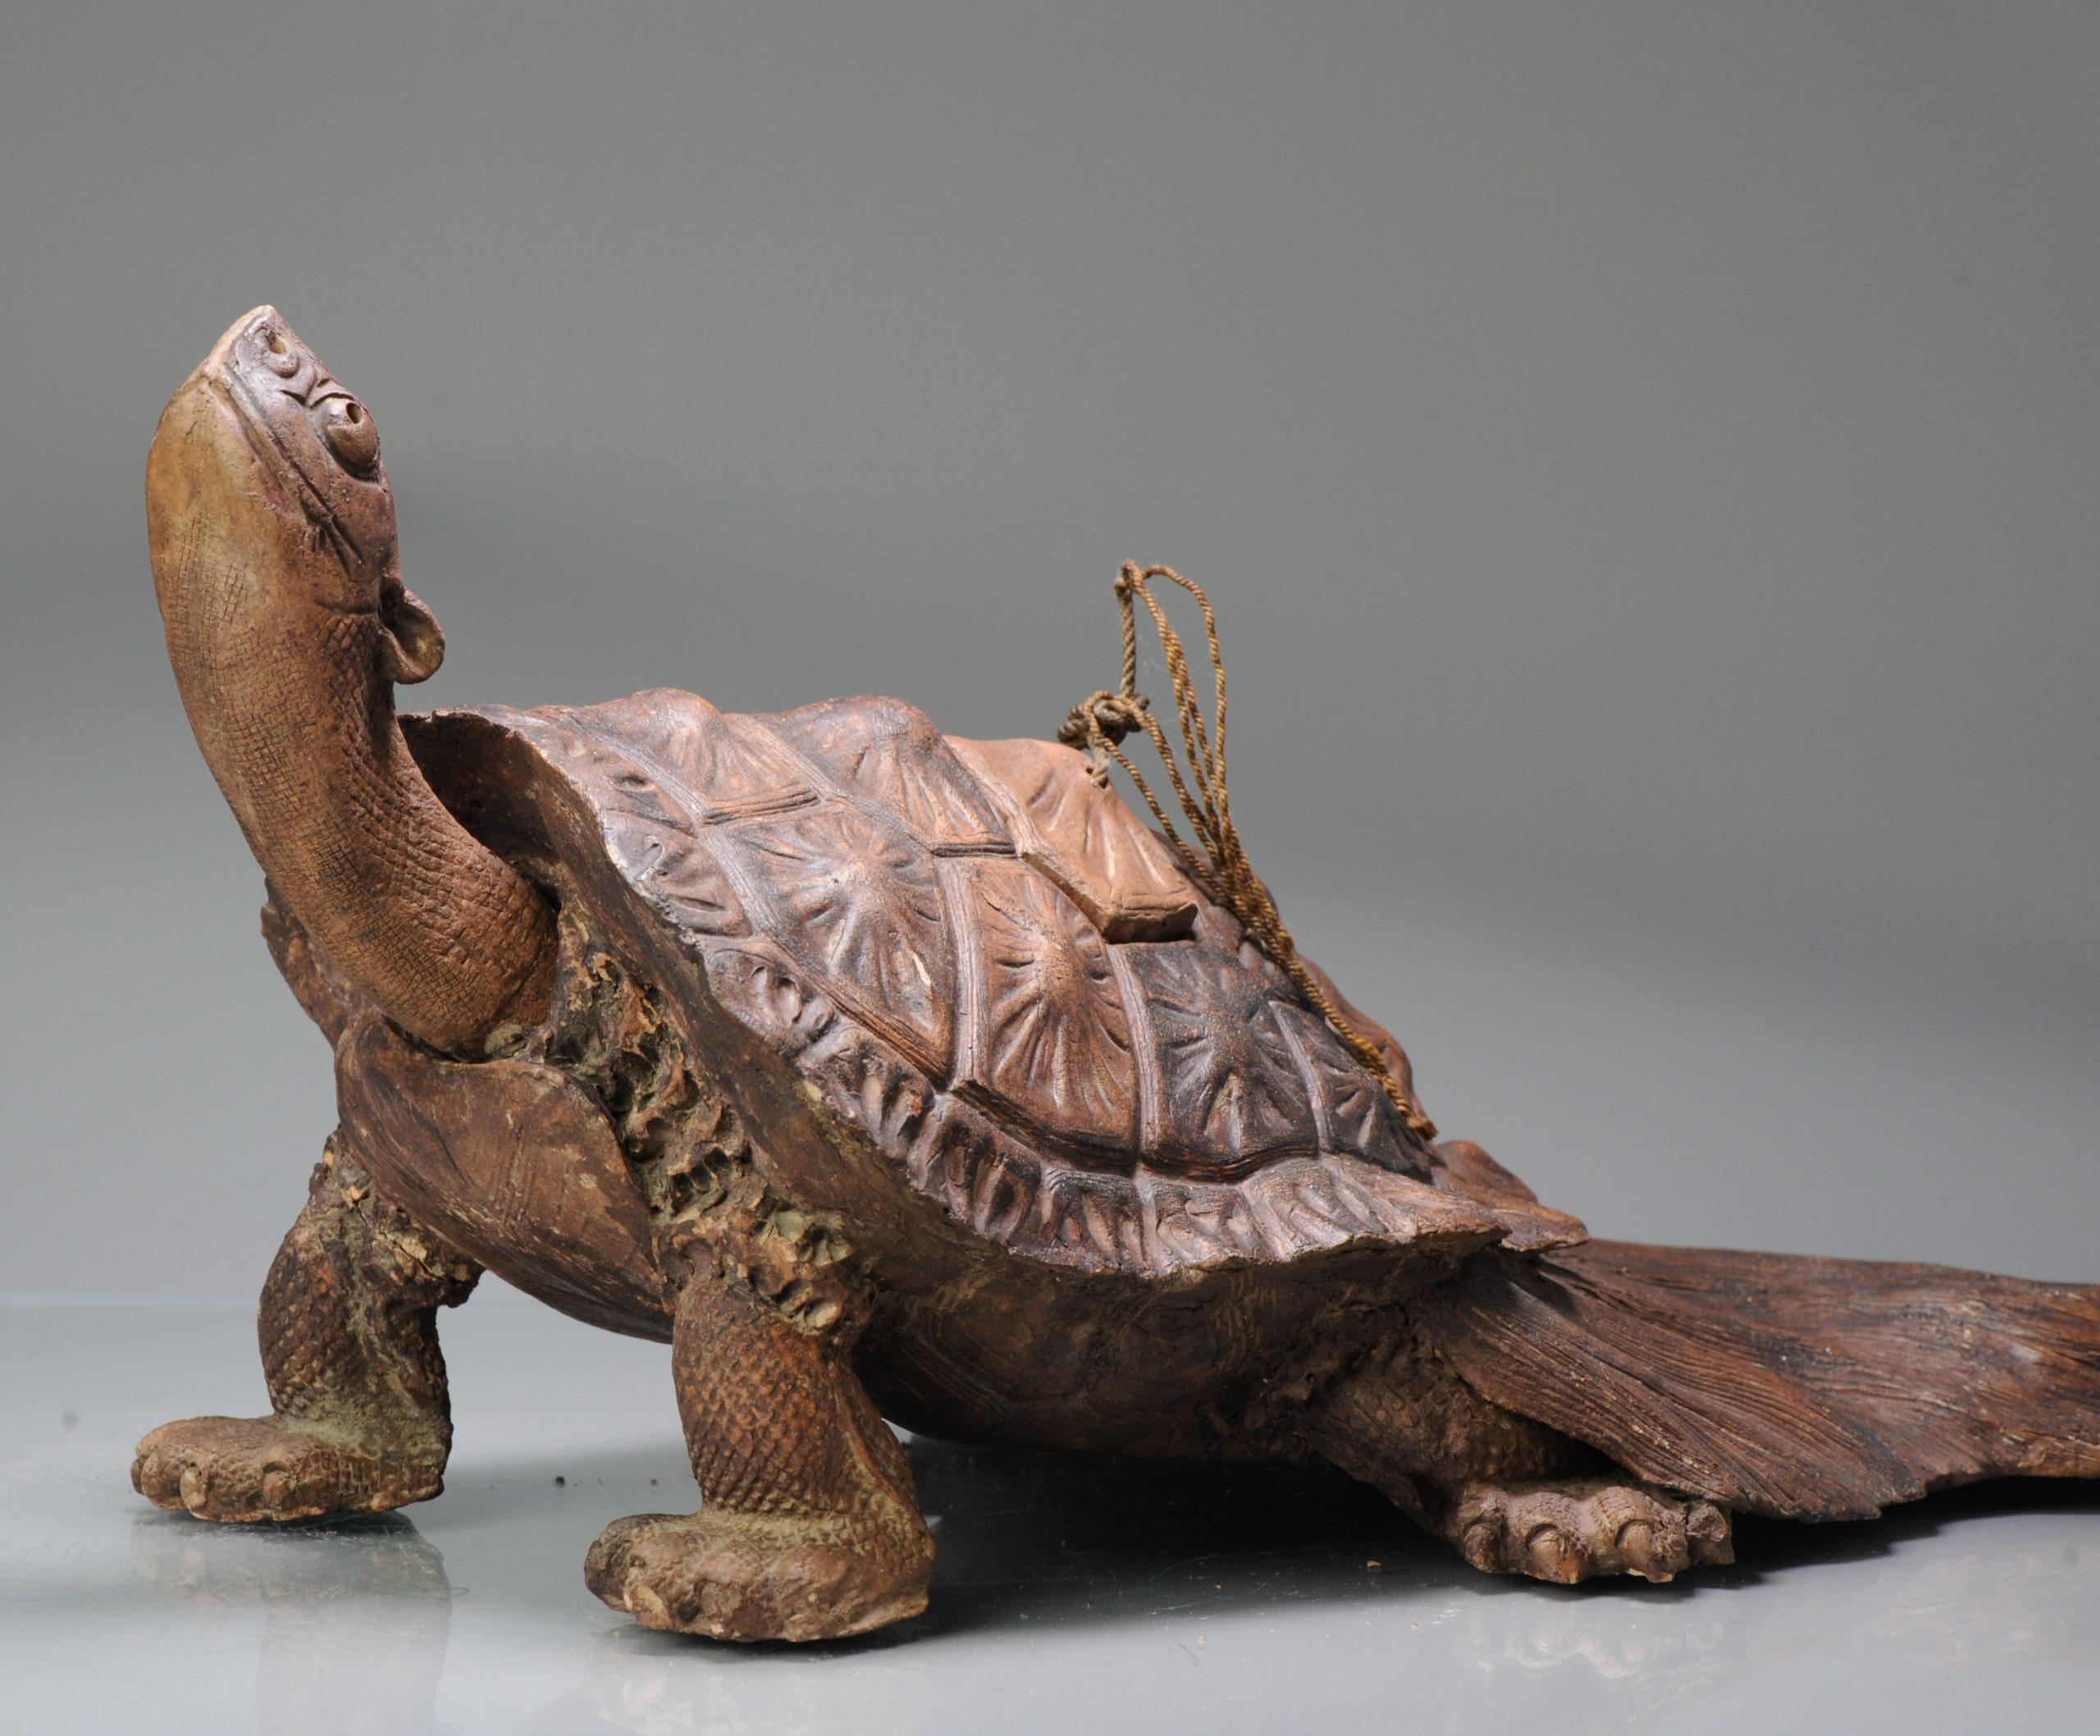 Antique Iwayaki Earthenware Edo Incense Burner of a Turtle 19th Century Japan, J For Sale 5